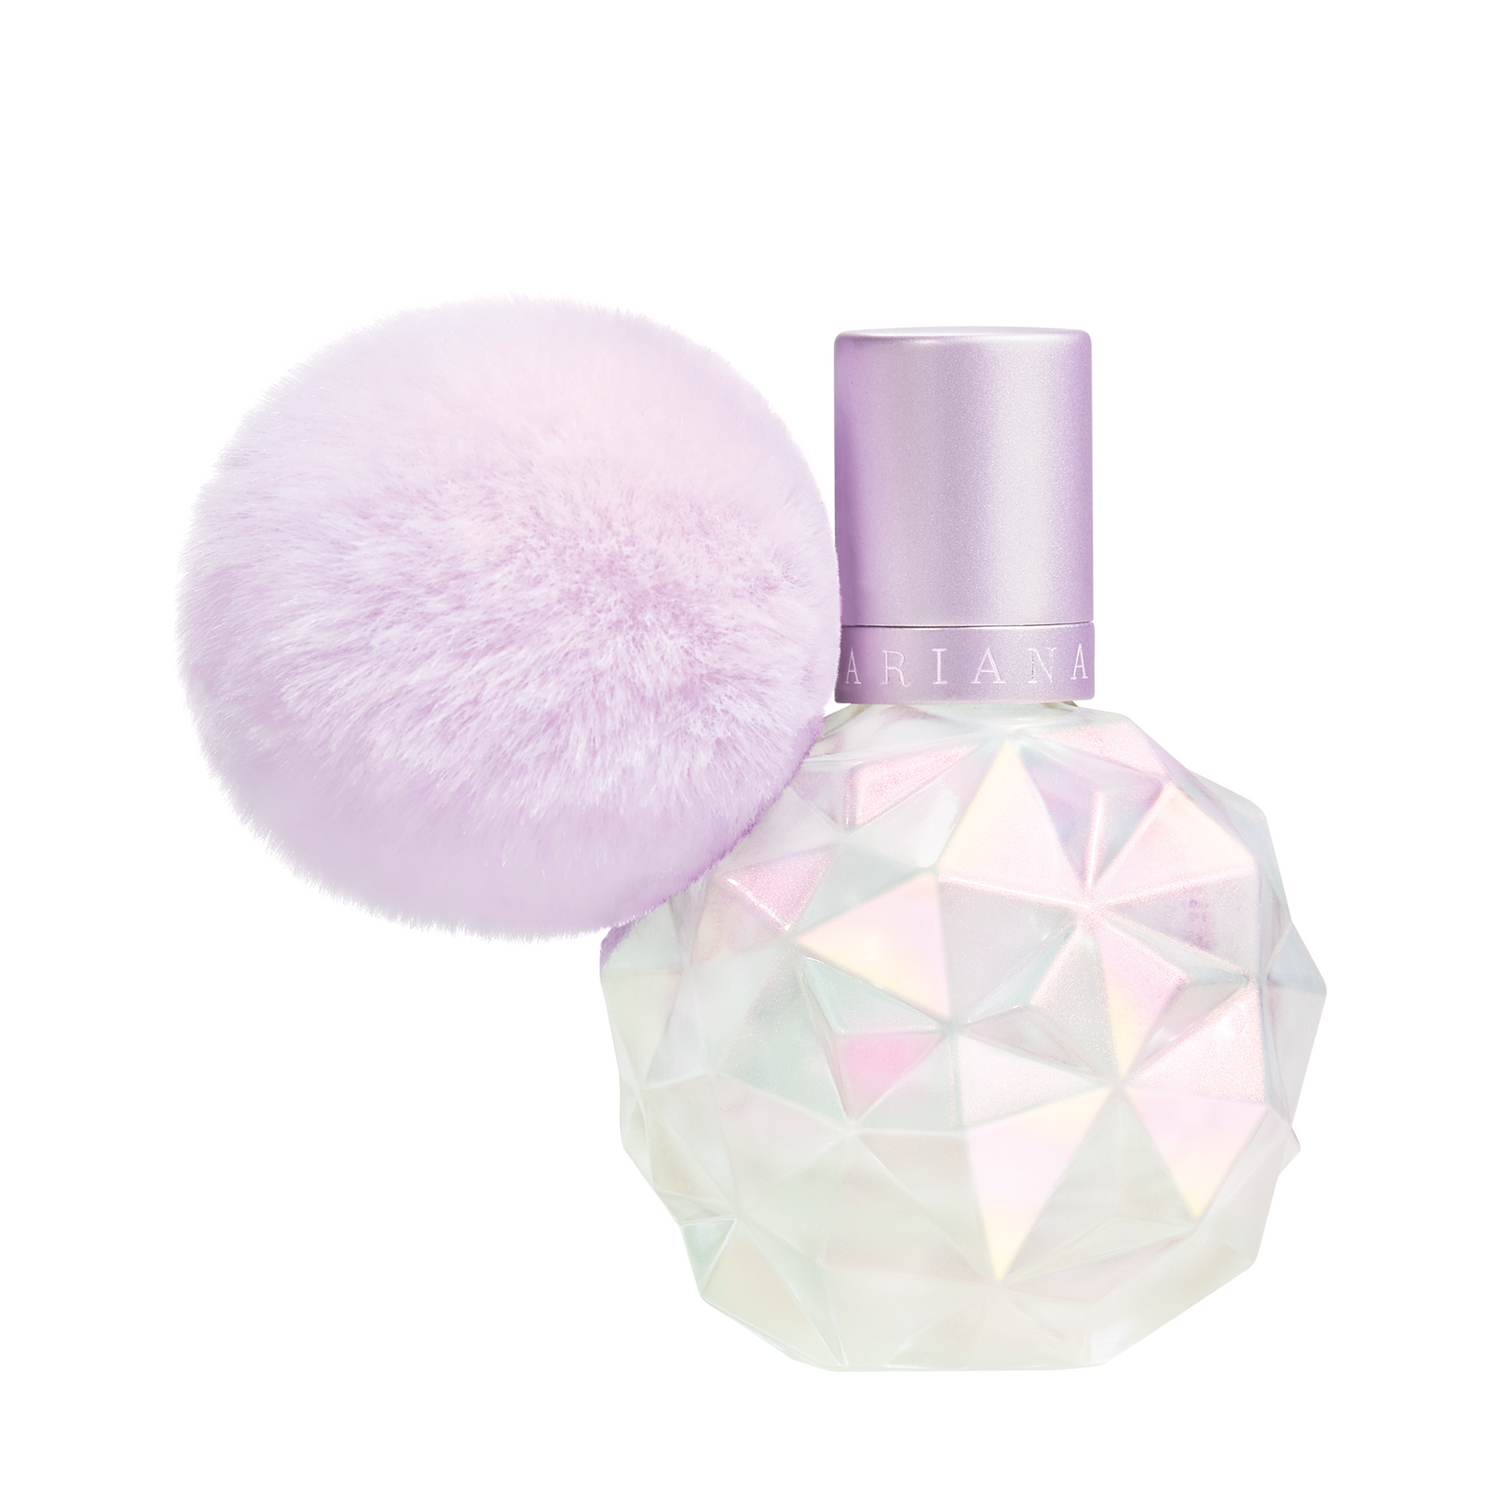 Moonlight by Ariana Grande perfume bottle